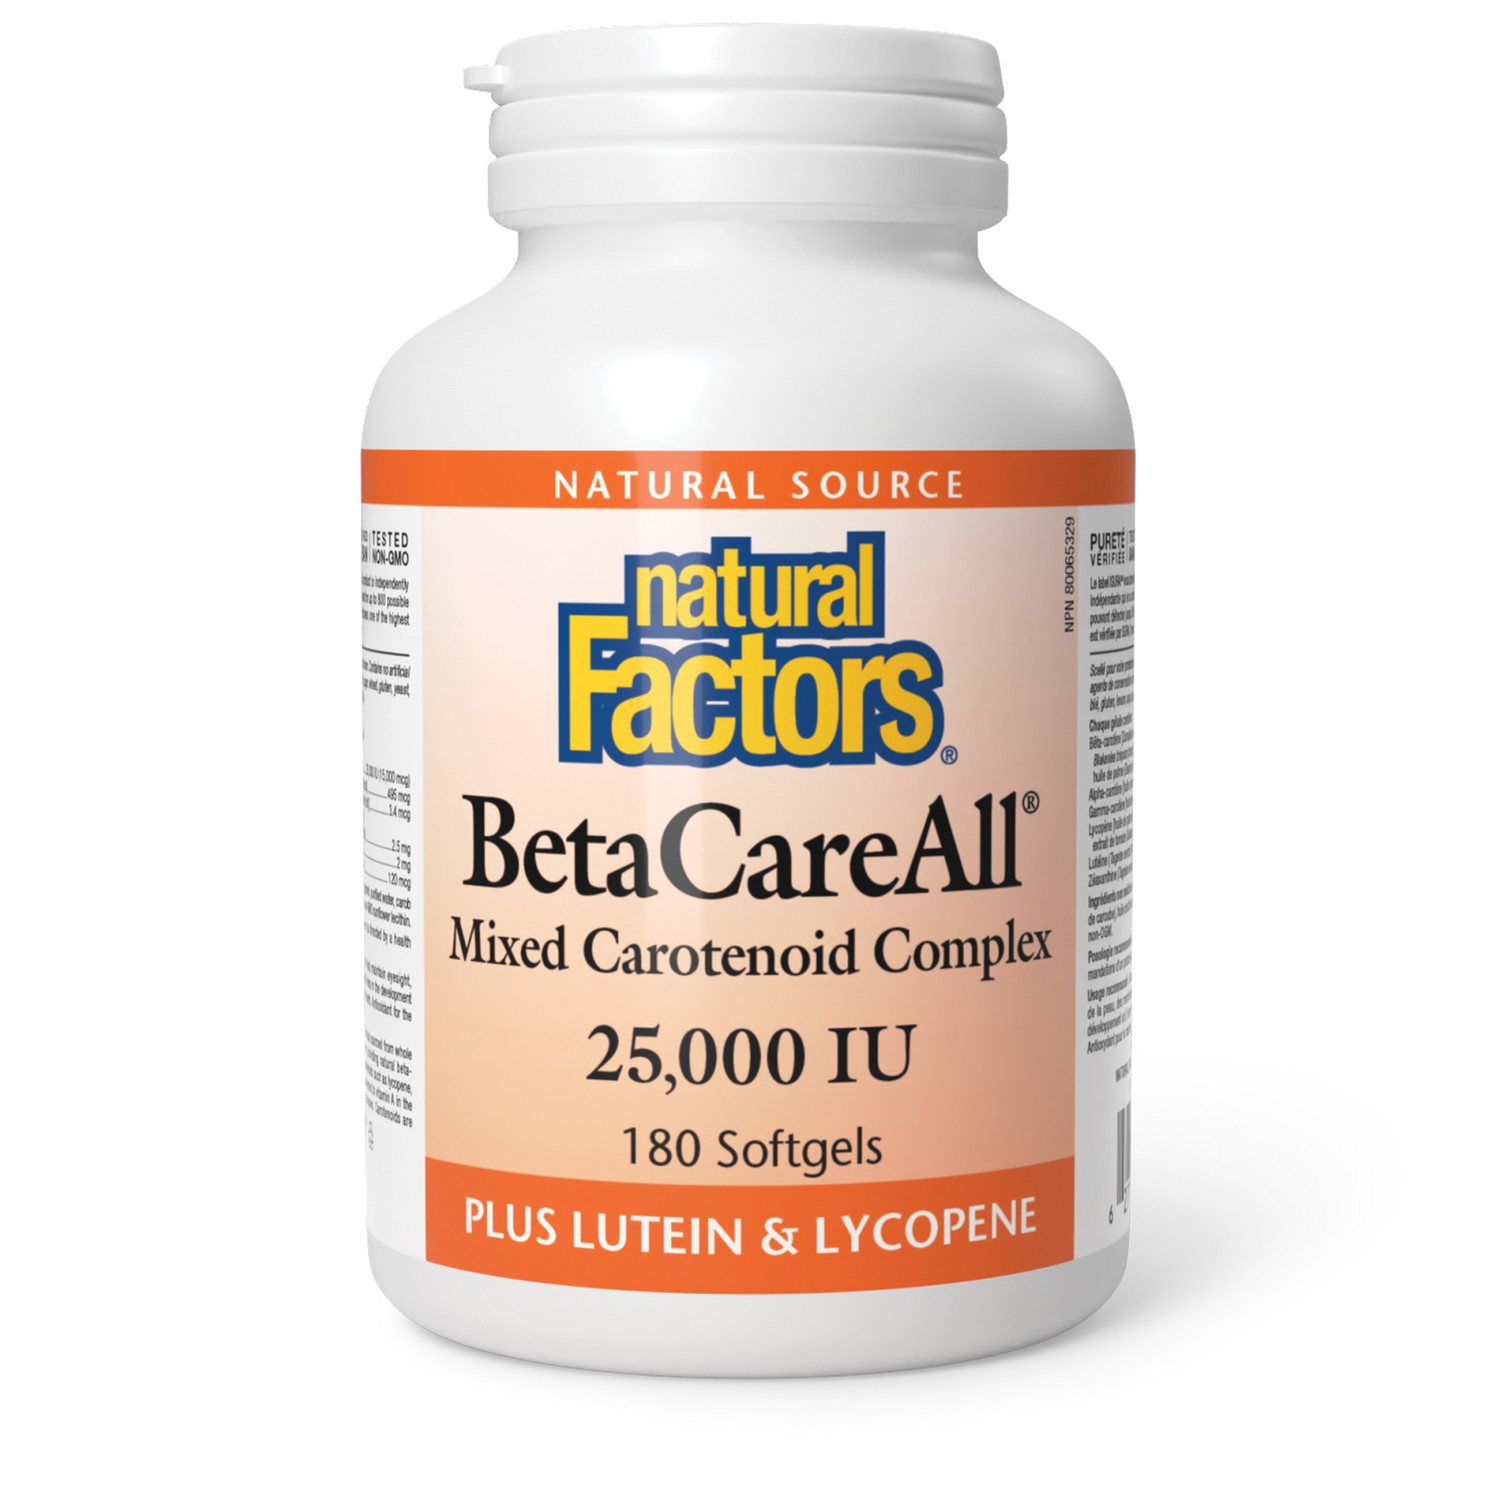 BetaCareAll®  25,000 IU, Natural Factors|v|image|1015